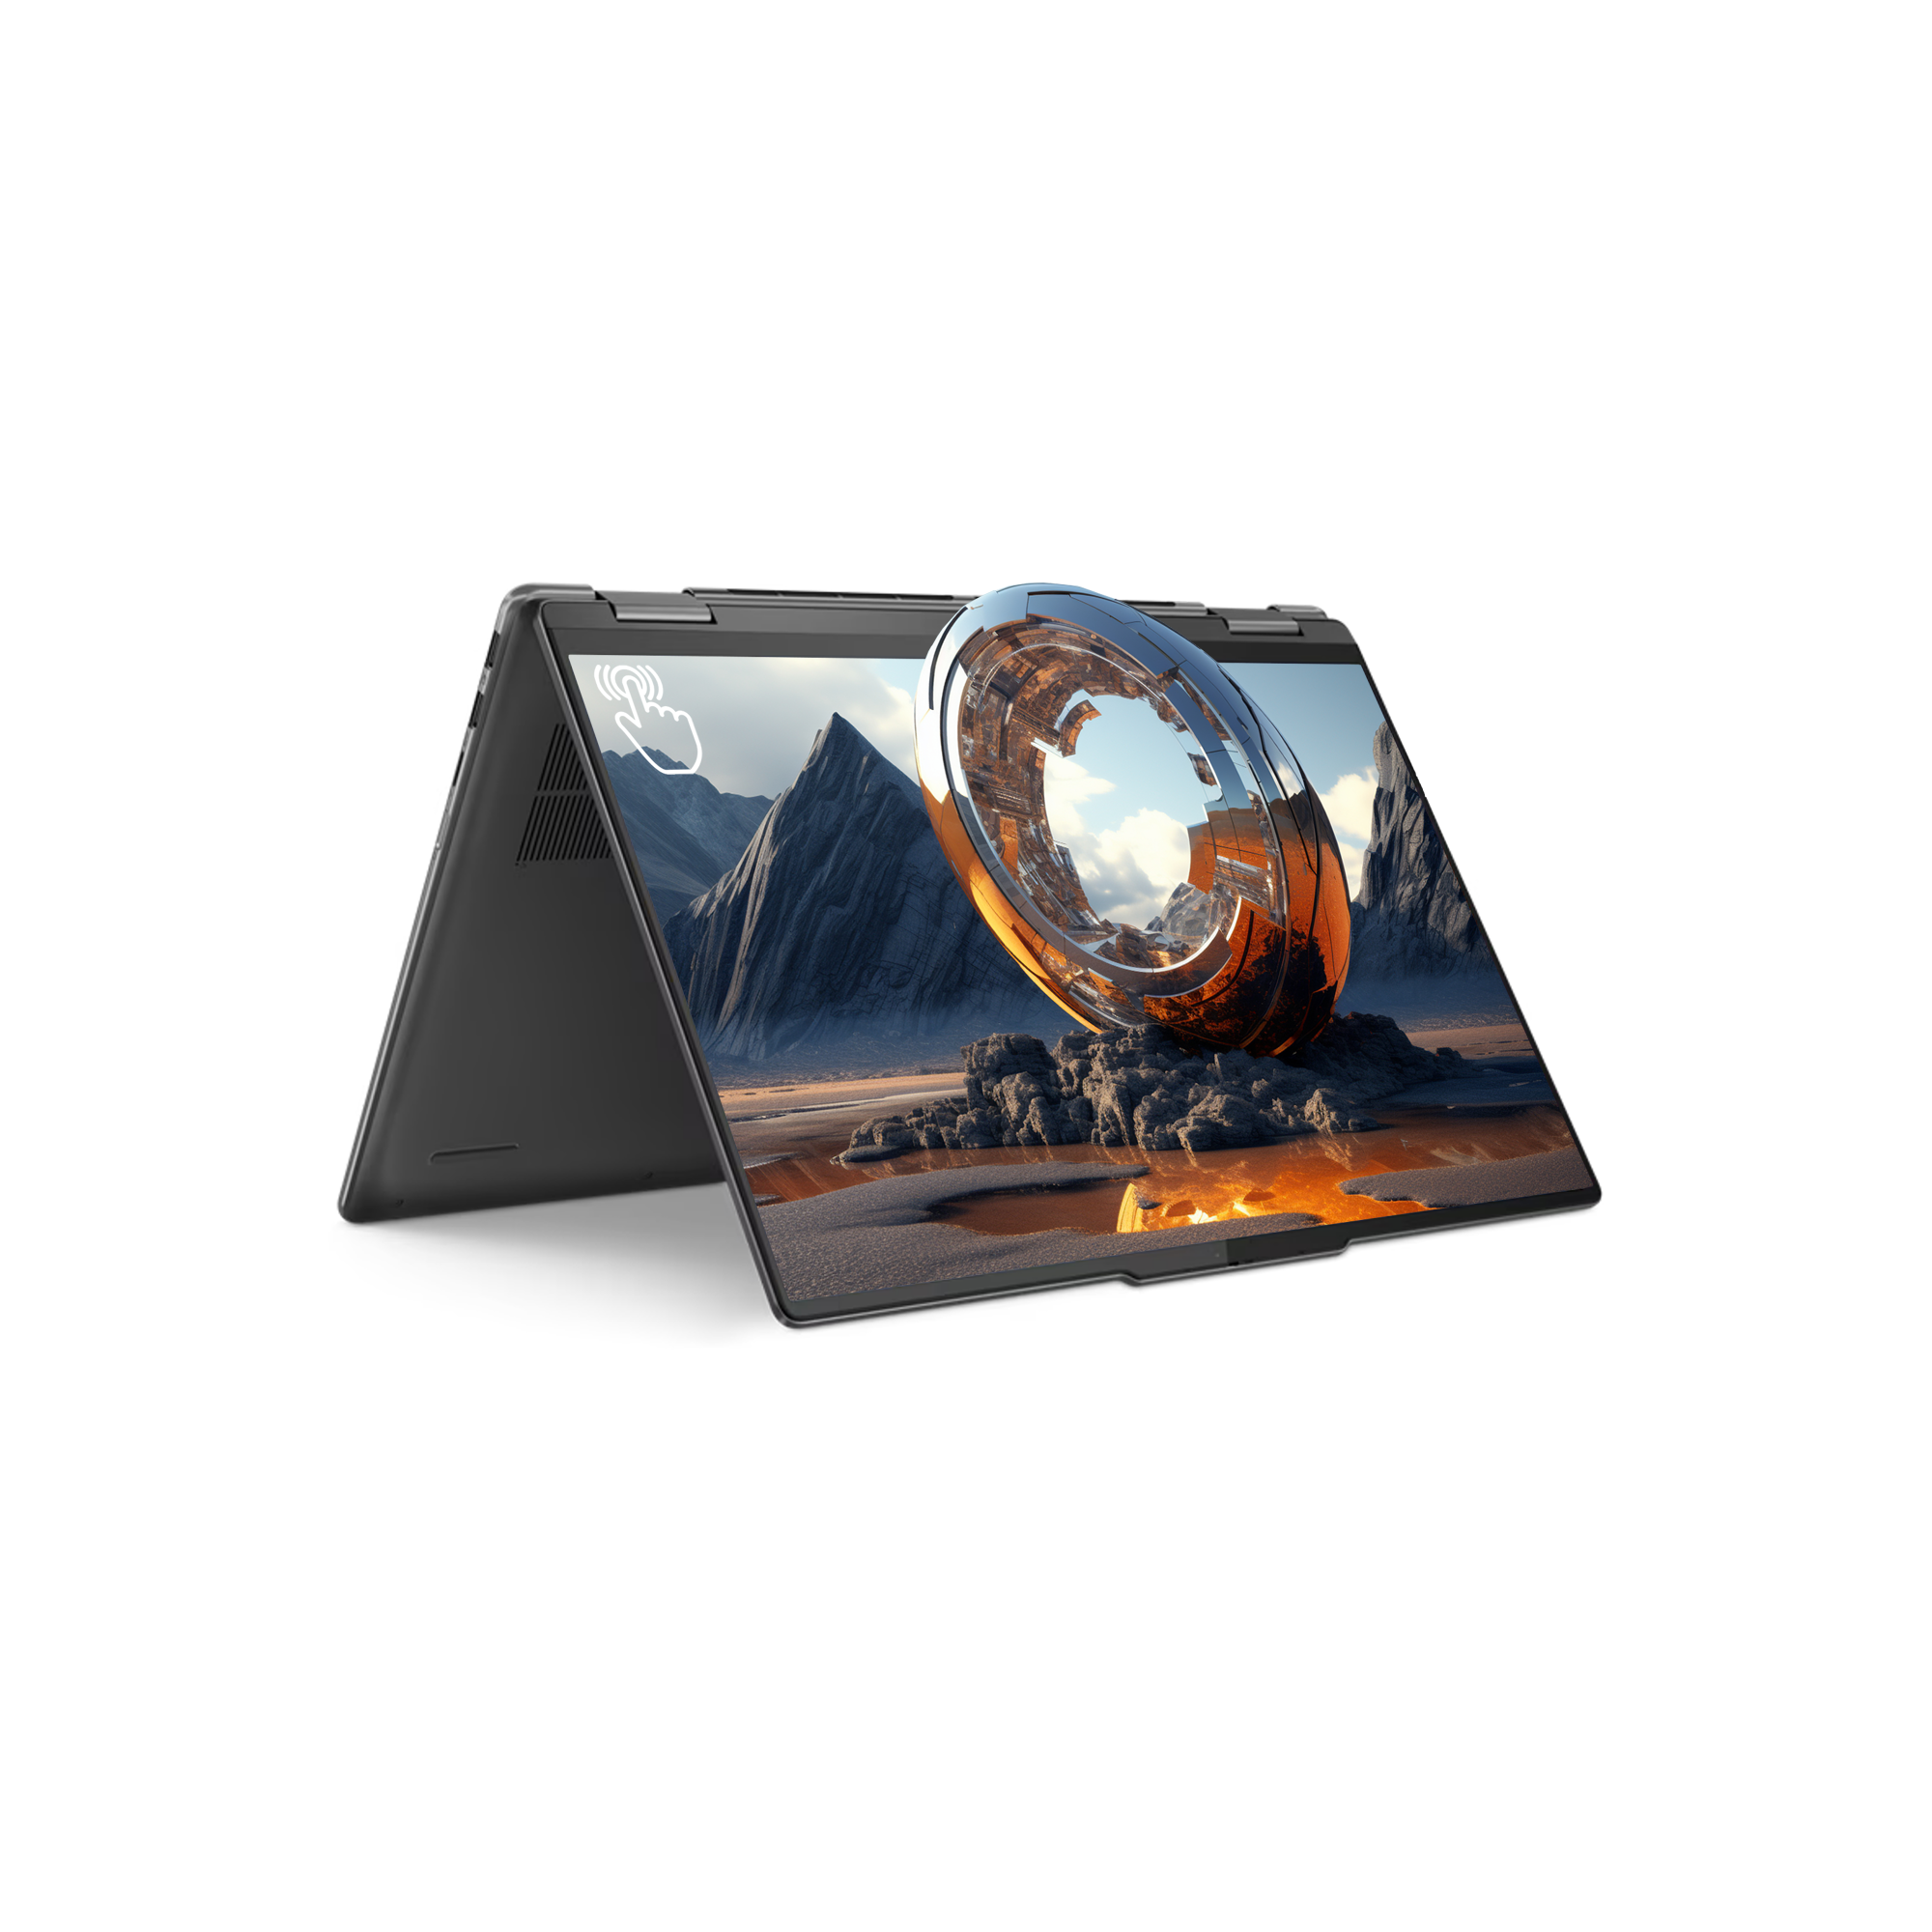 Yoga 7i 16″ 2 in 1 Touchscreen Laptops